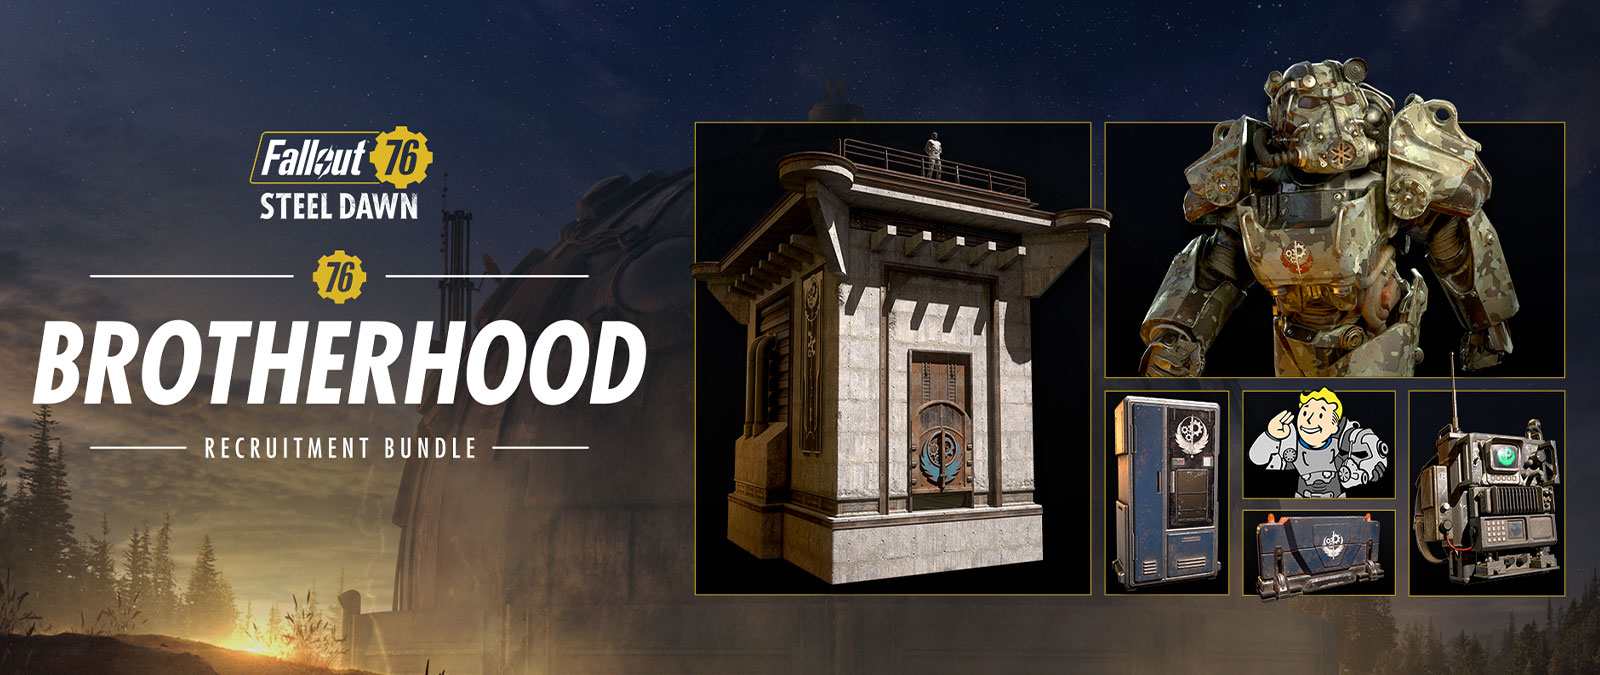 Fallout 76 Steel Dawn Brotherhood Recruitment Bundle, силовая броня, разведывательная башня и другие предметы